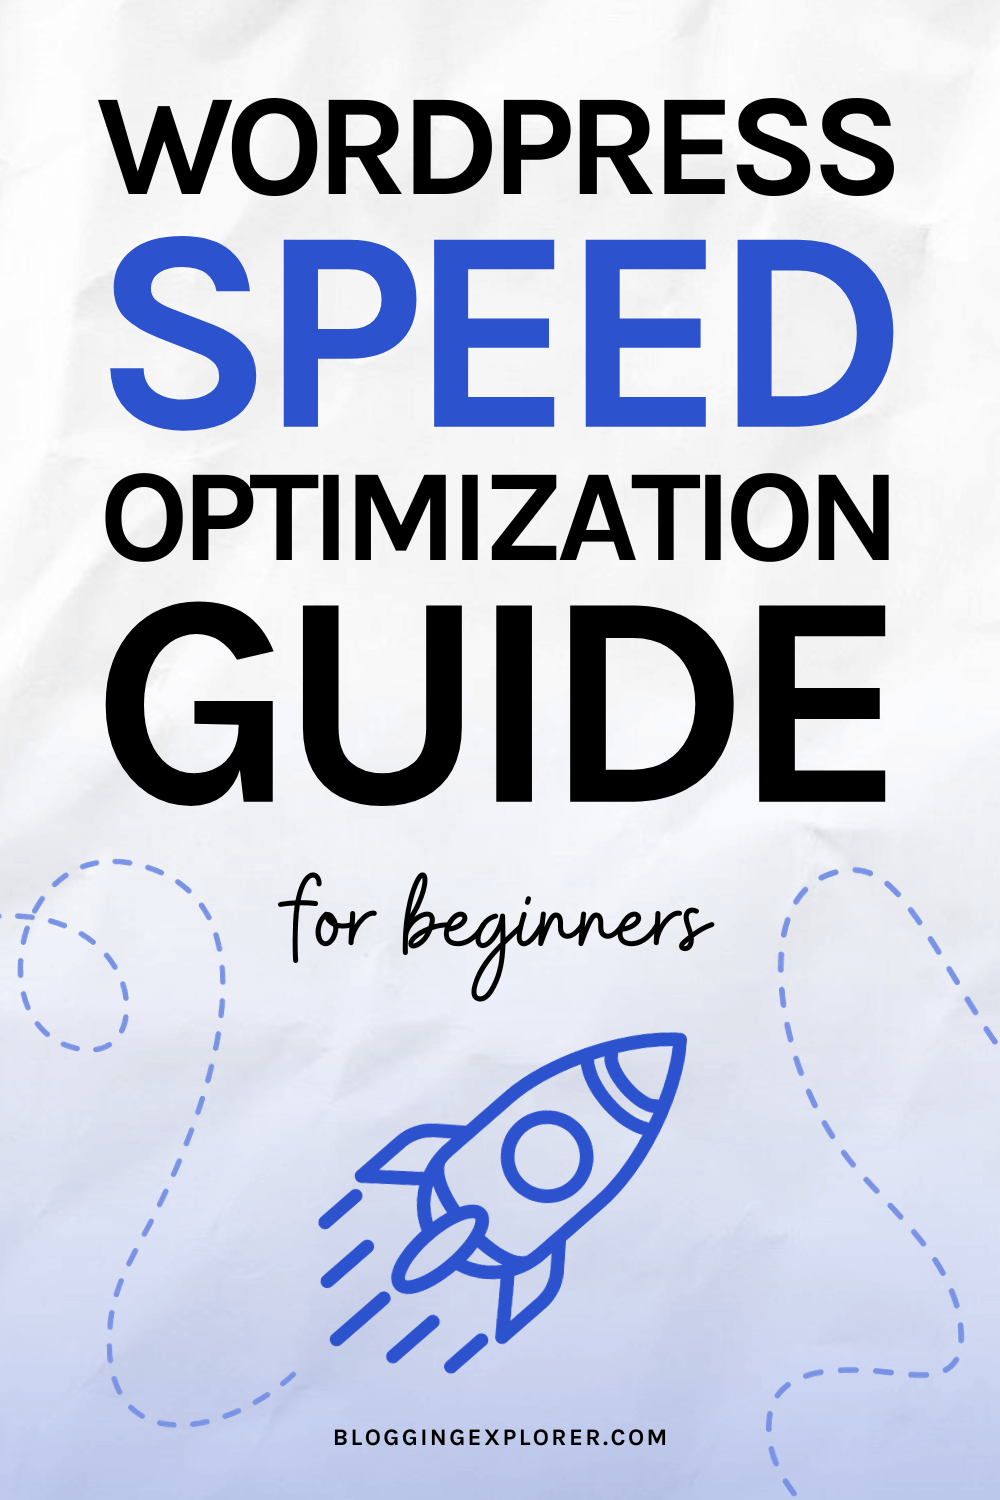 WordPress speed optimization guide for beginners